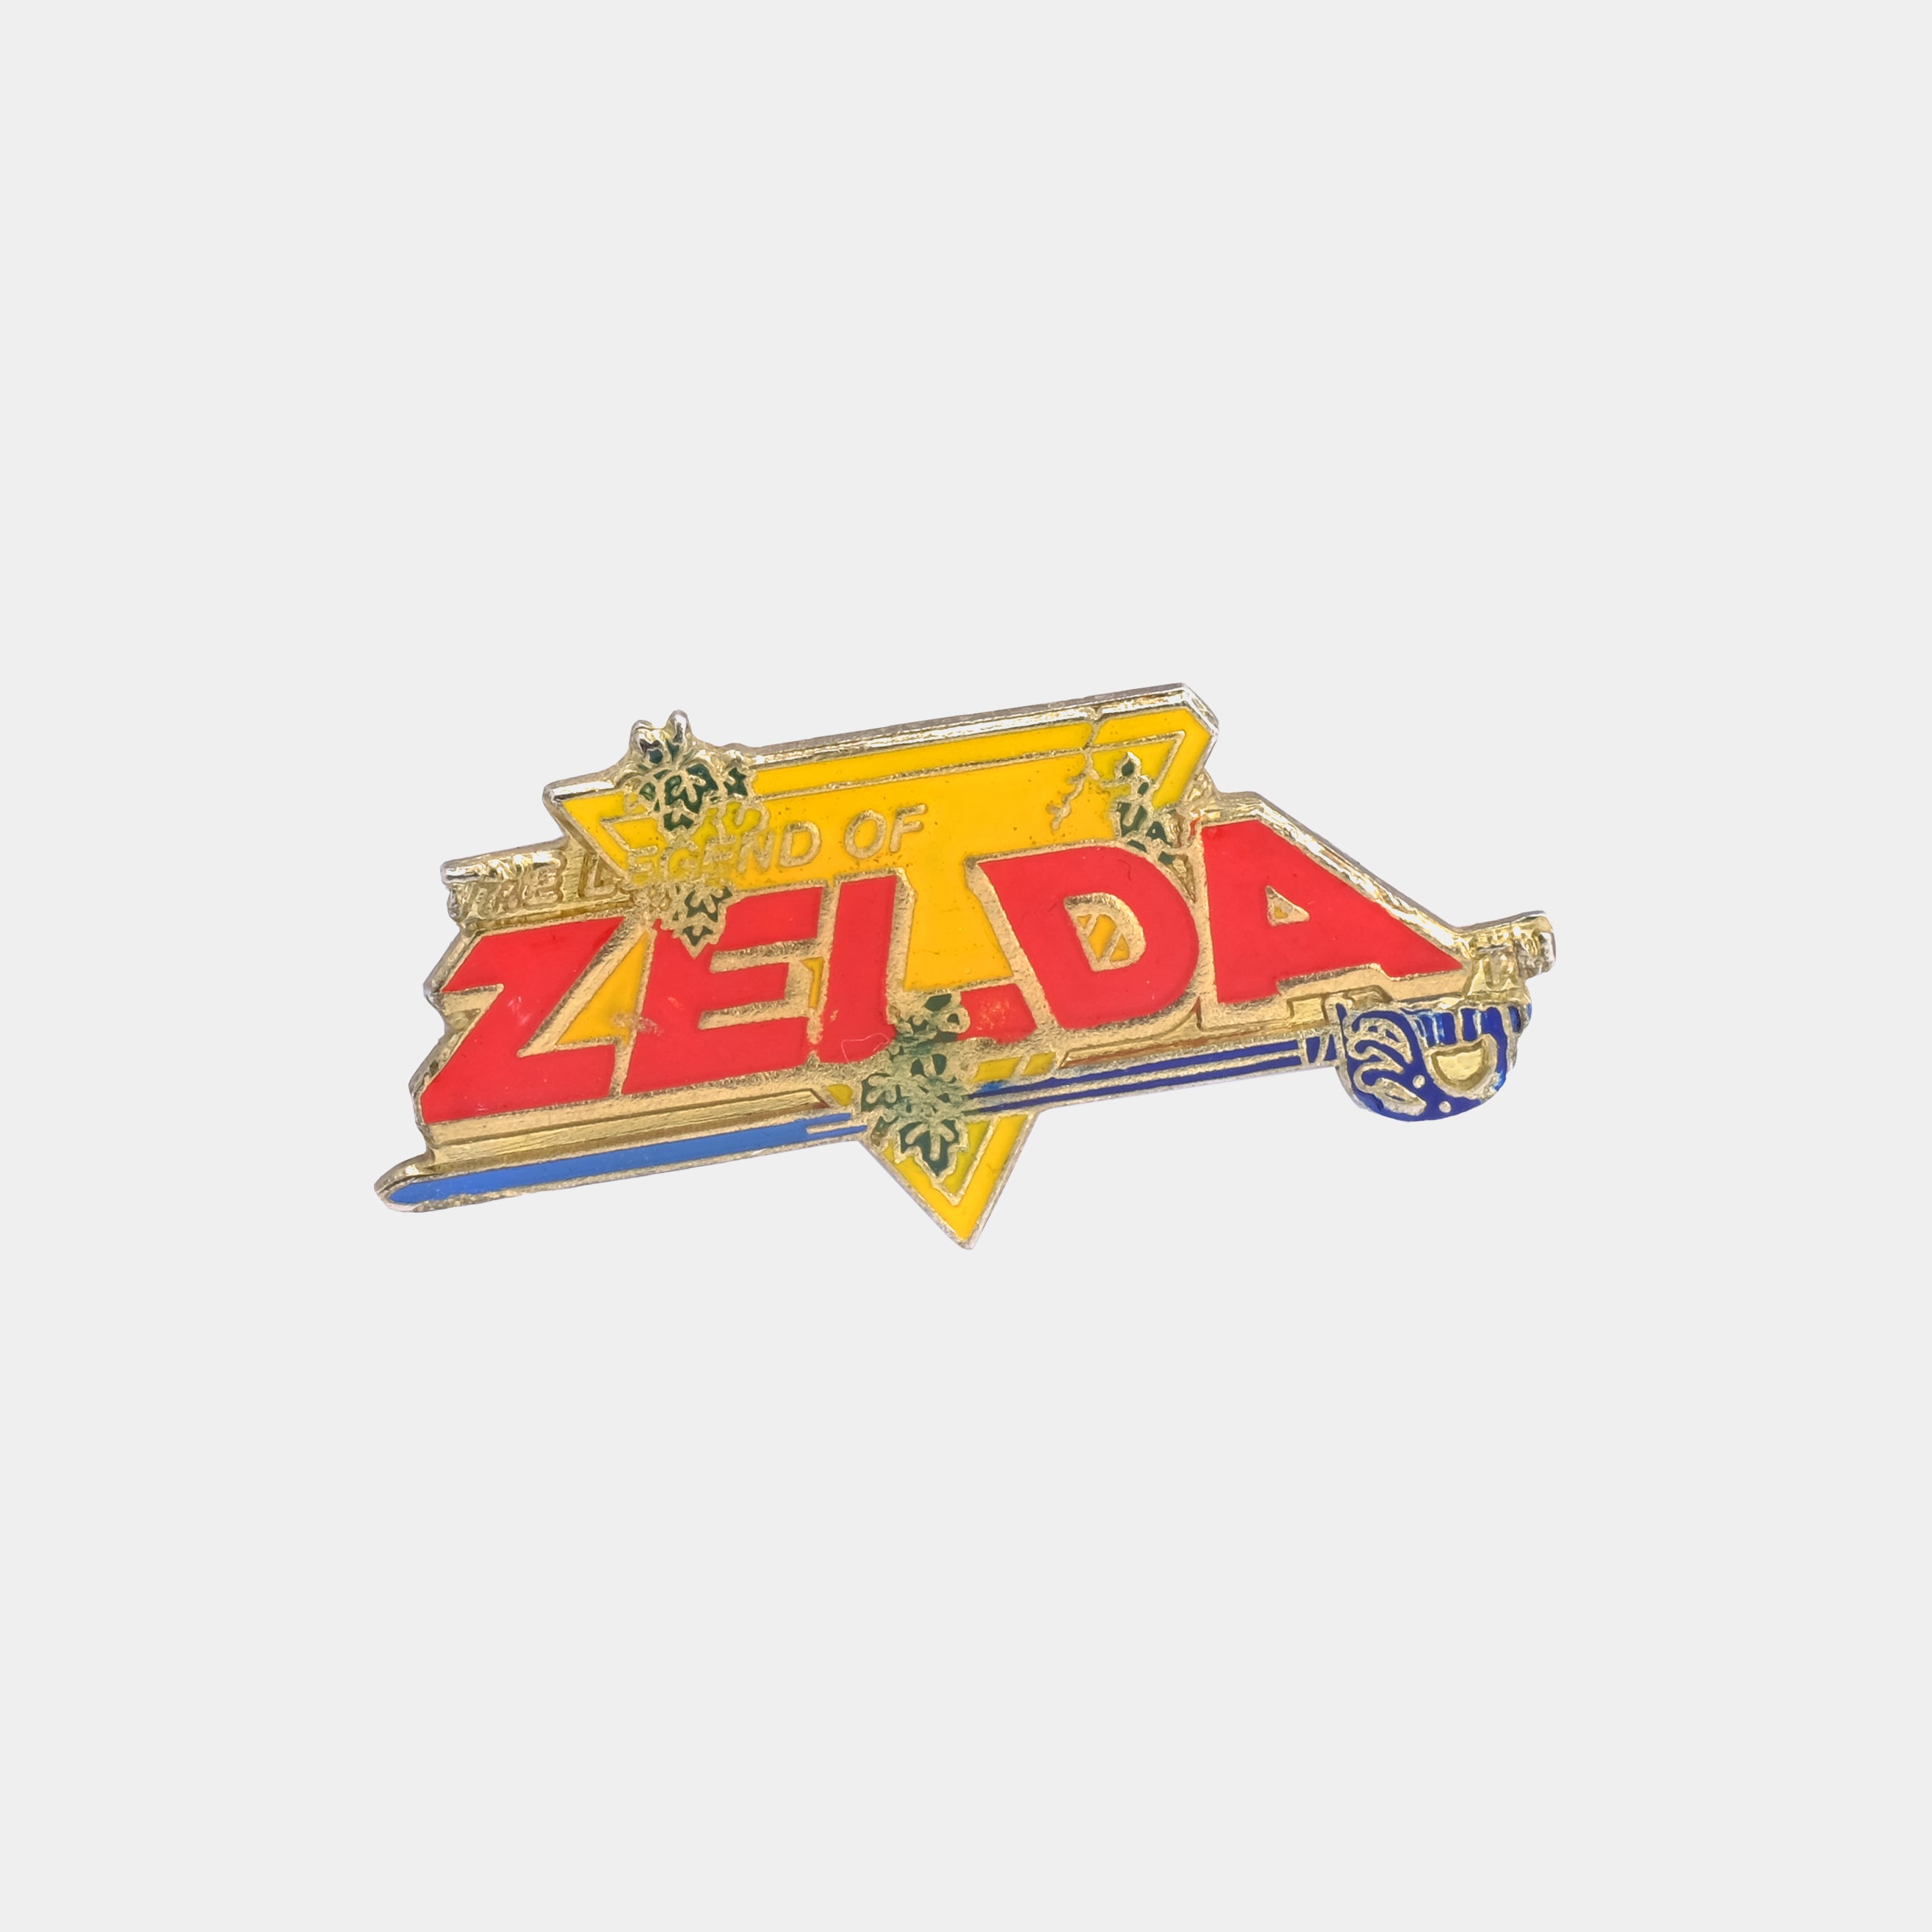 Nintendo Legend of Zelda 1988 Vintage Enamel Pin